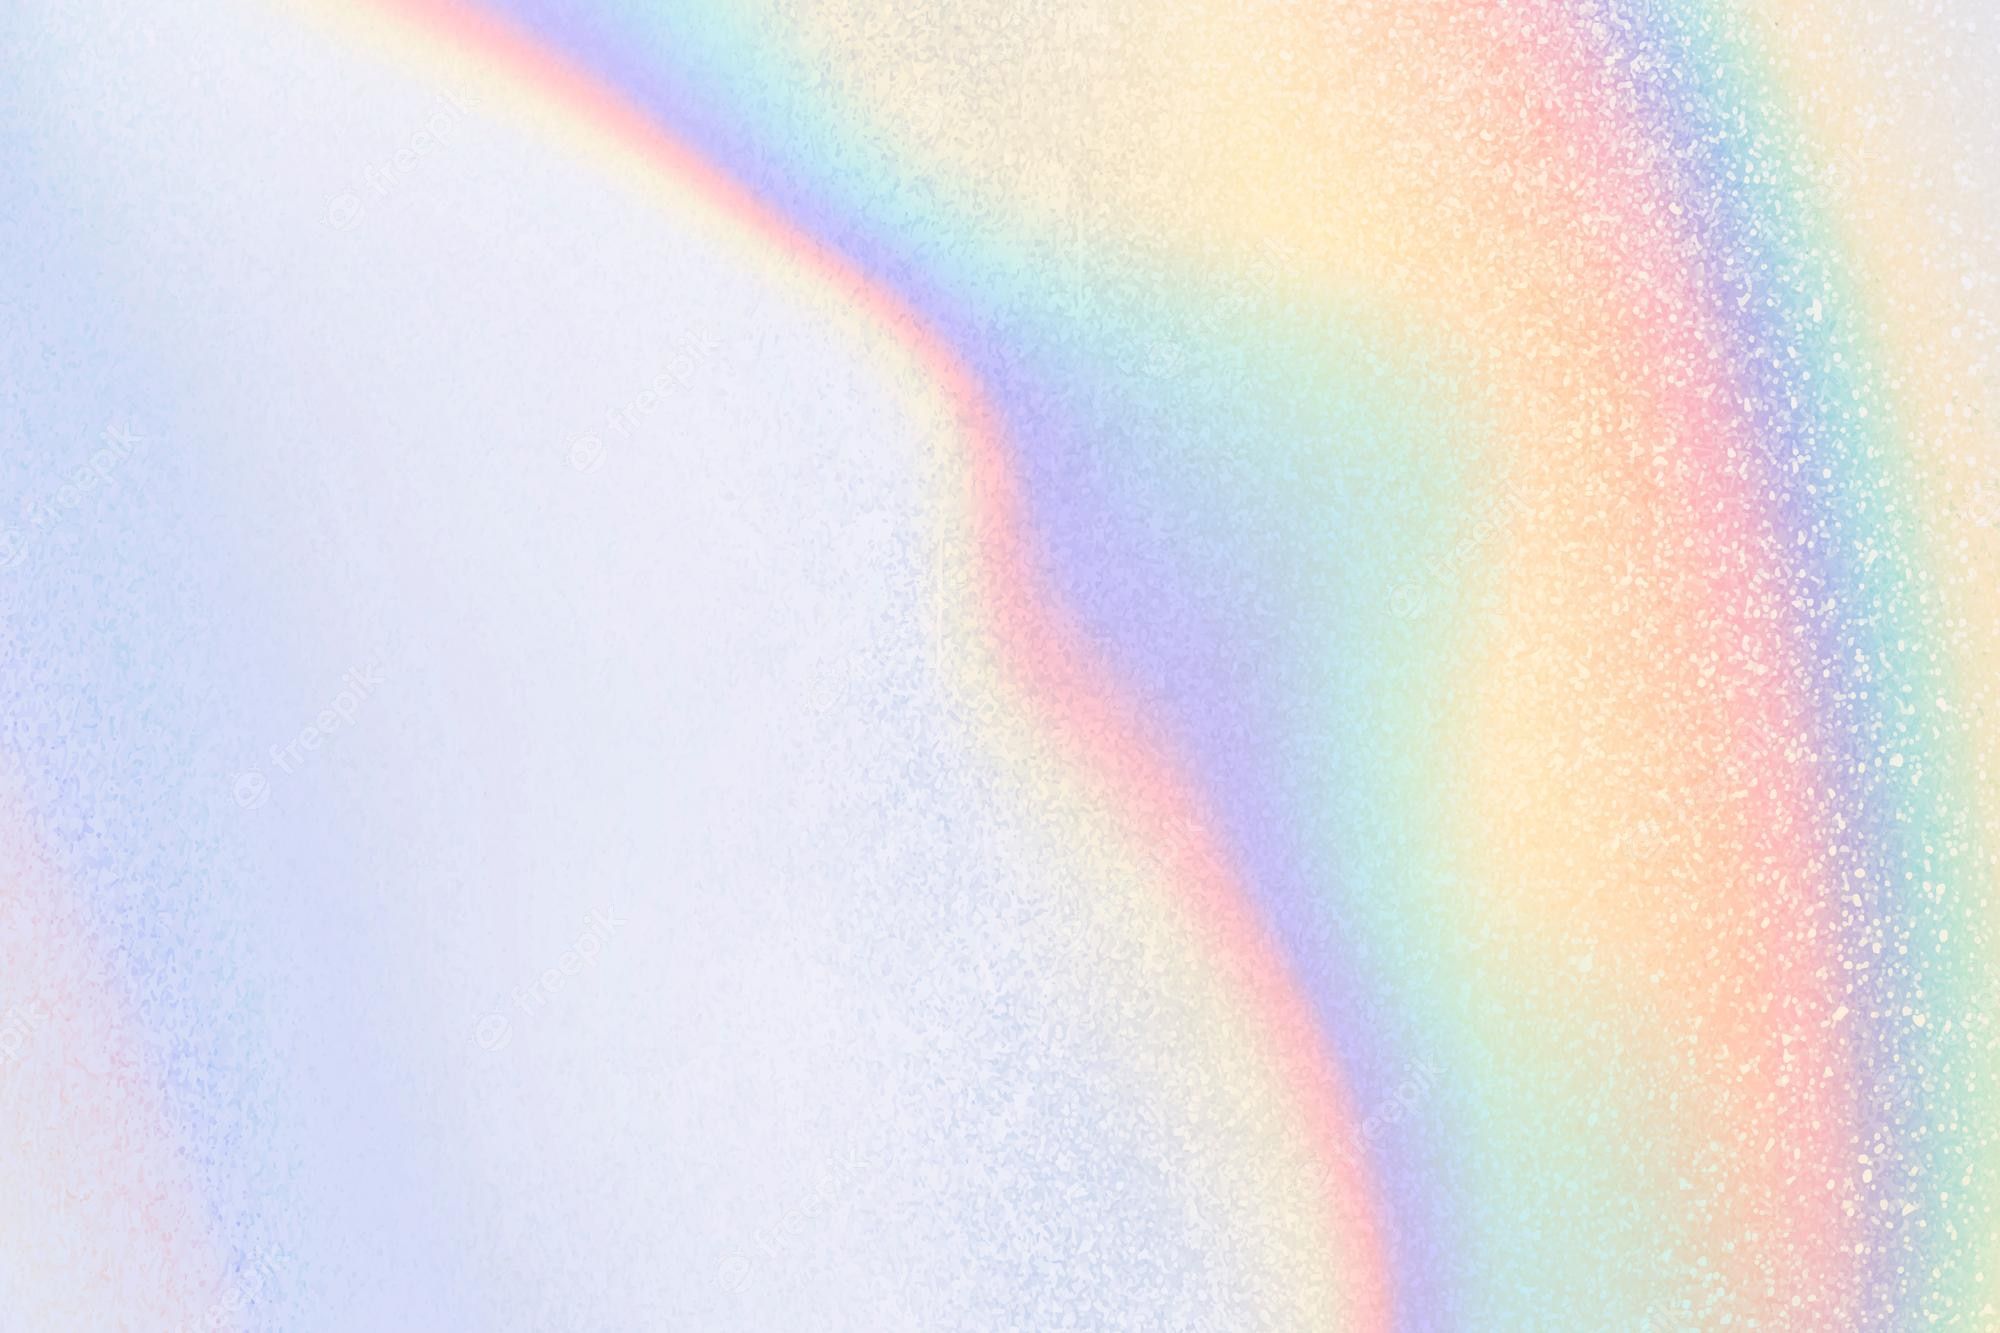  Regenbogen Hintergrundbild 2000x1333. Rainbow Aesthetic Image